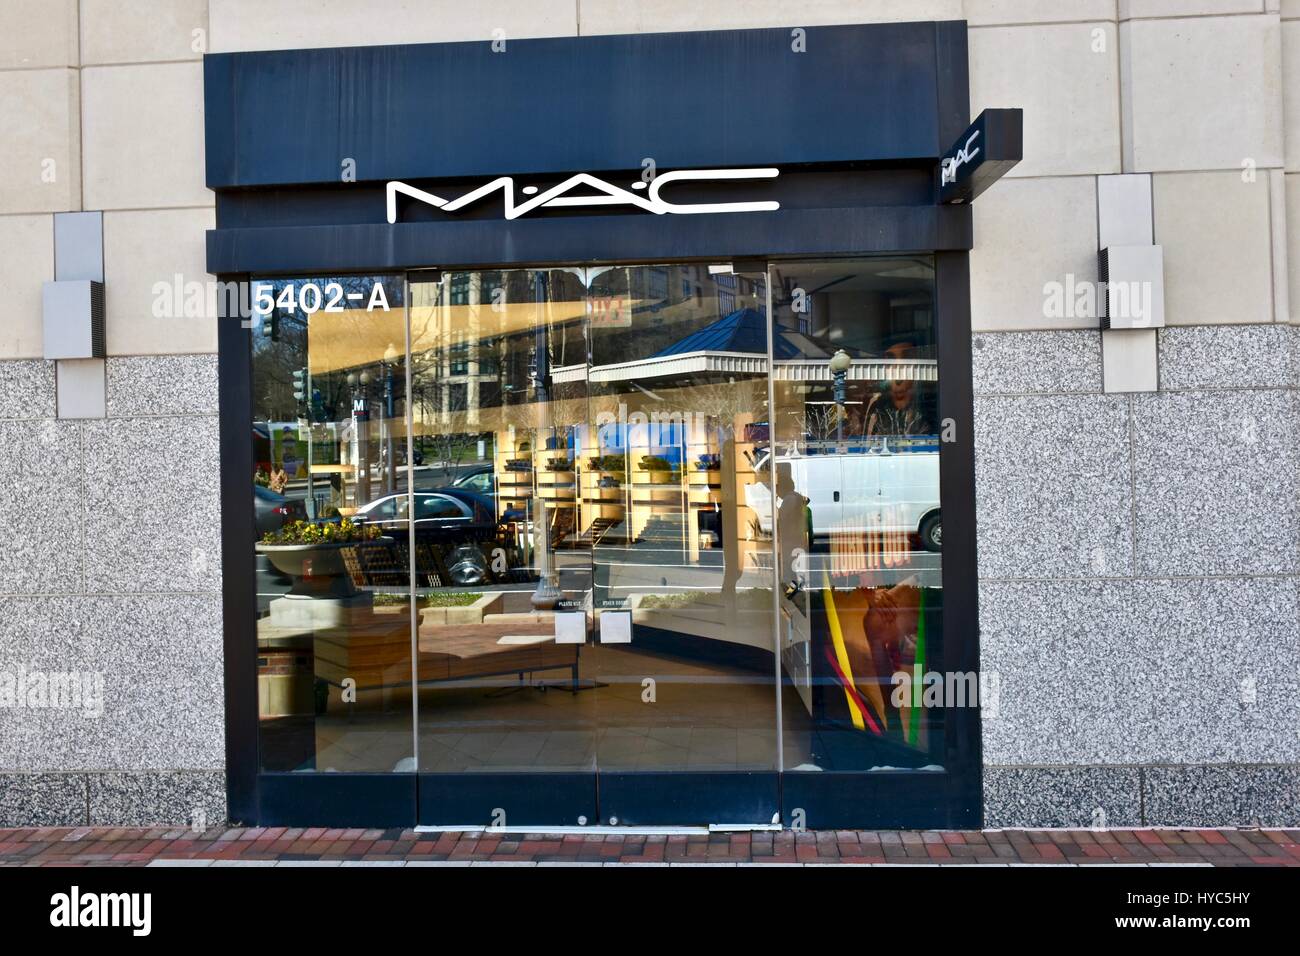 MAC cosmetics storefront Stock Photo